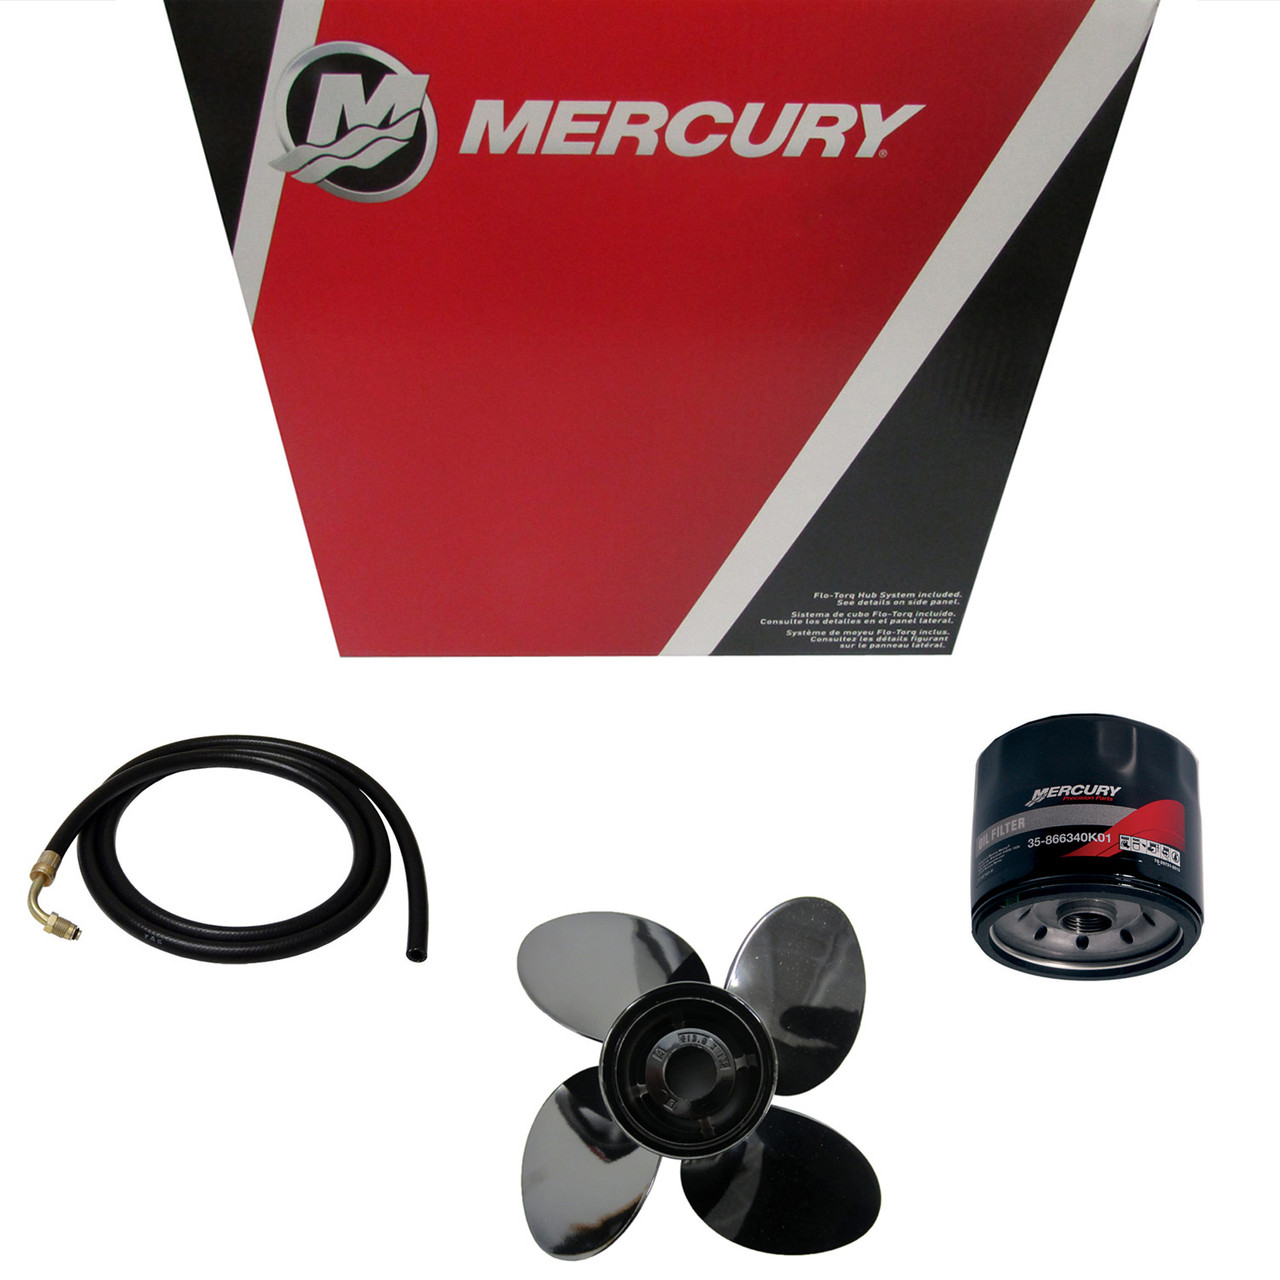 Mercury Marine / Mercruiser New OEM Oil-Diesel, 858042K01